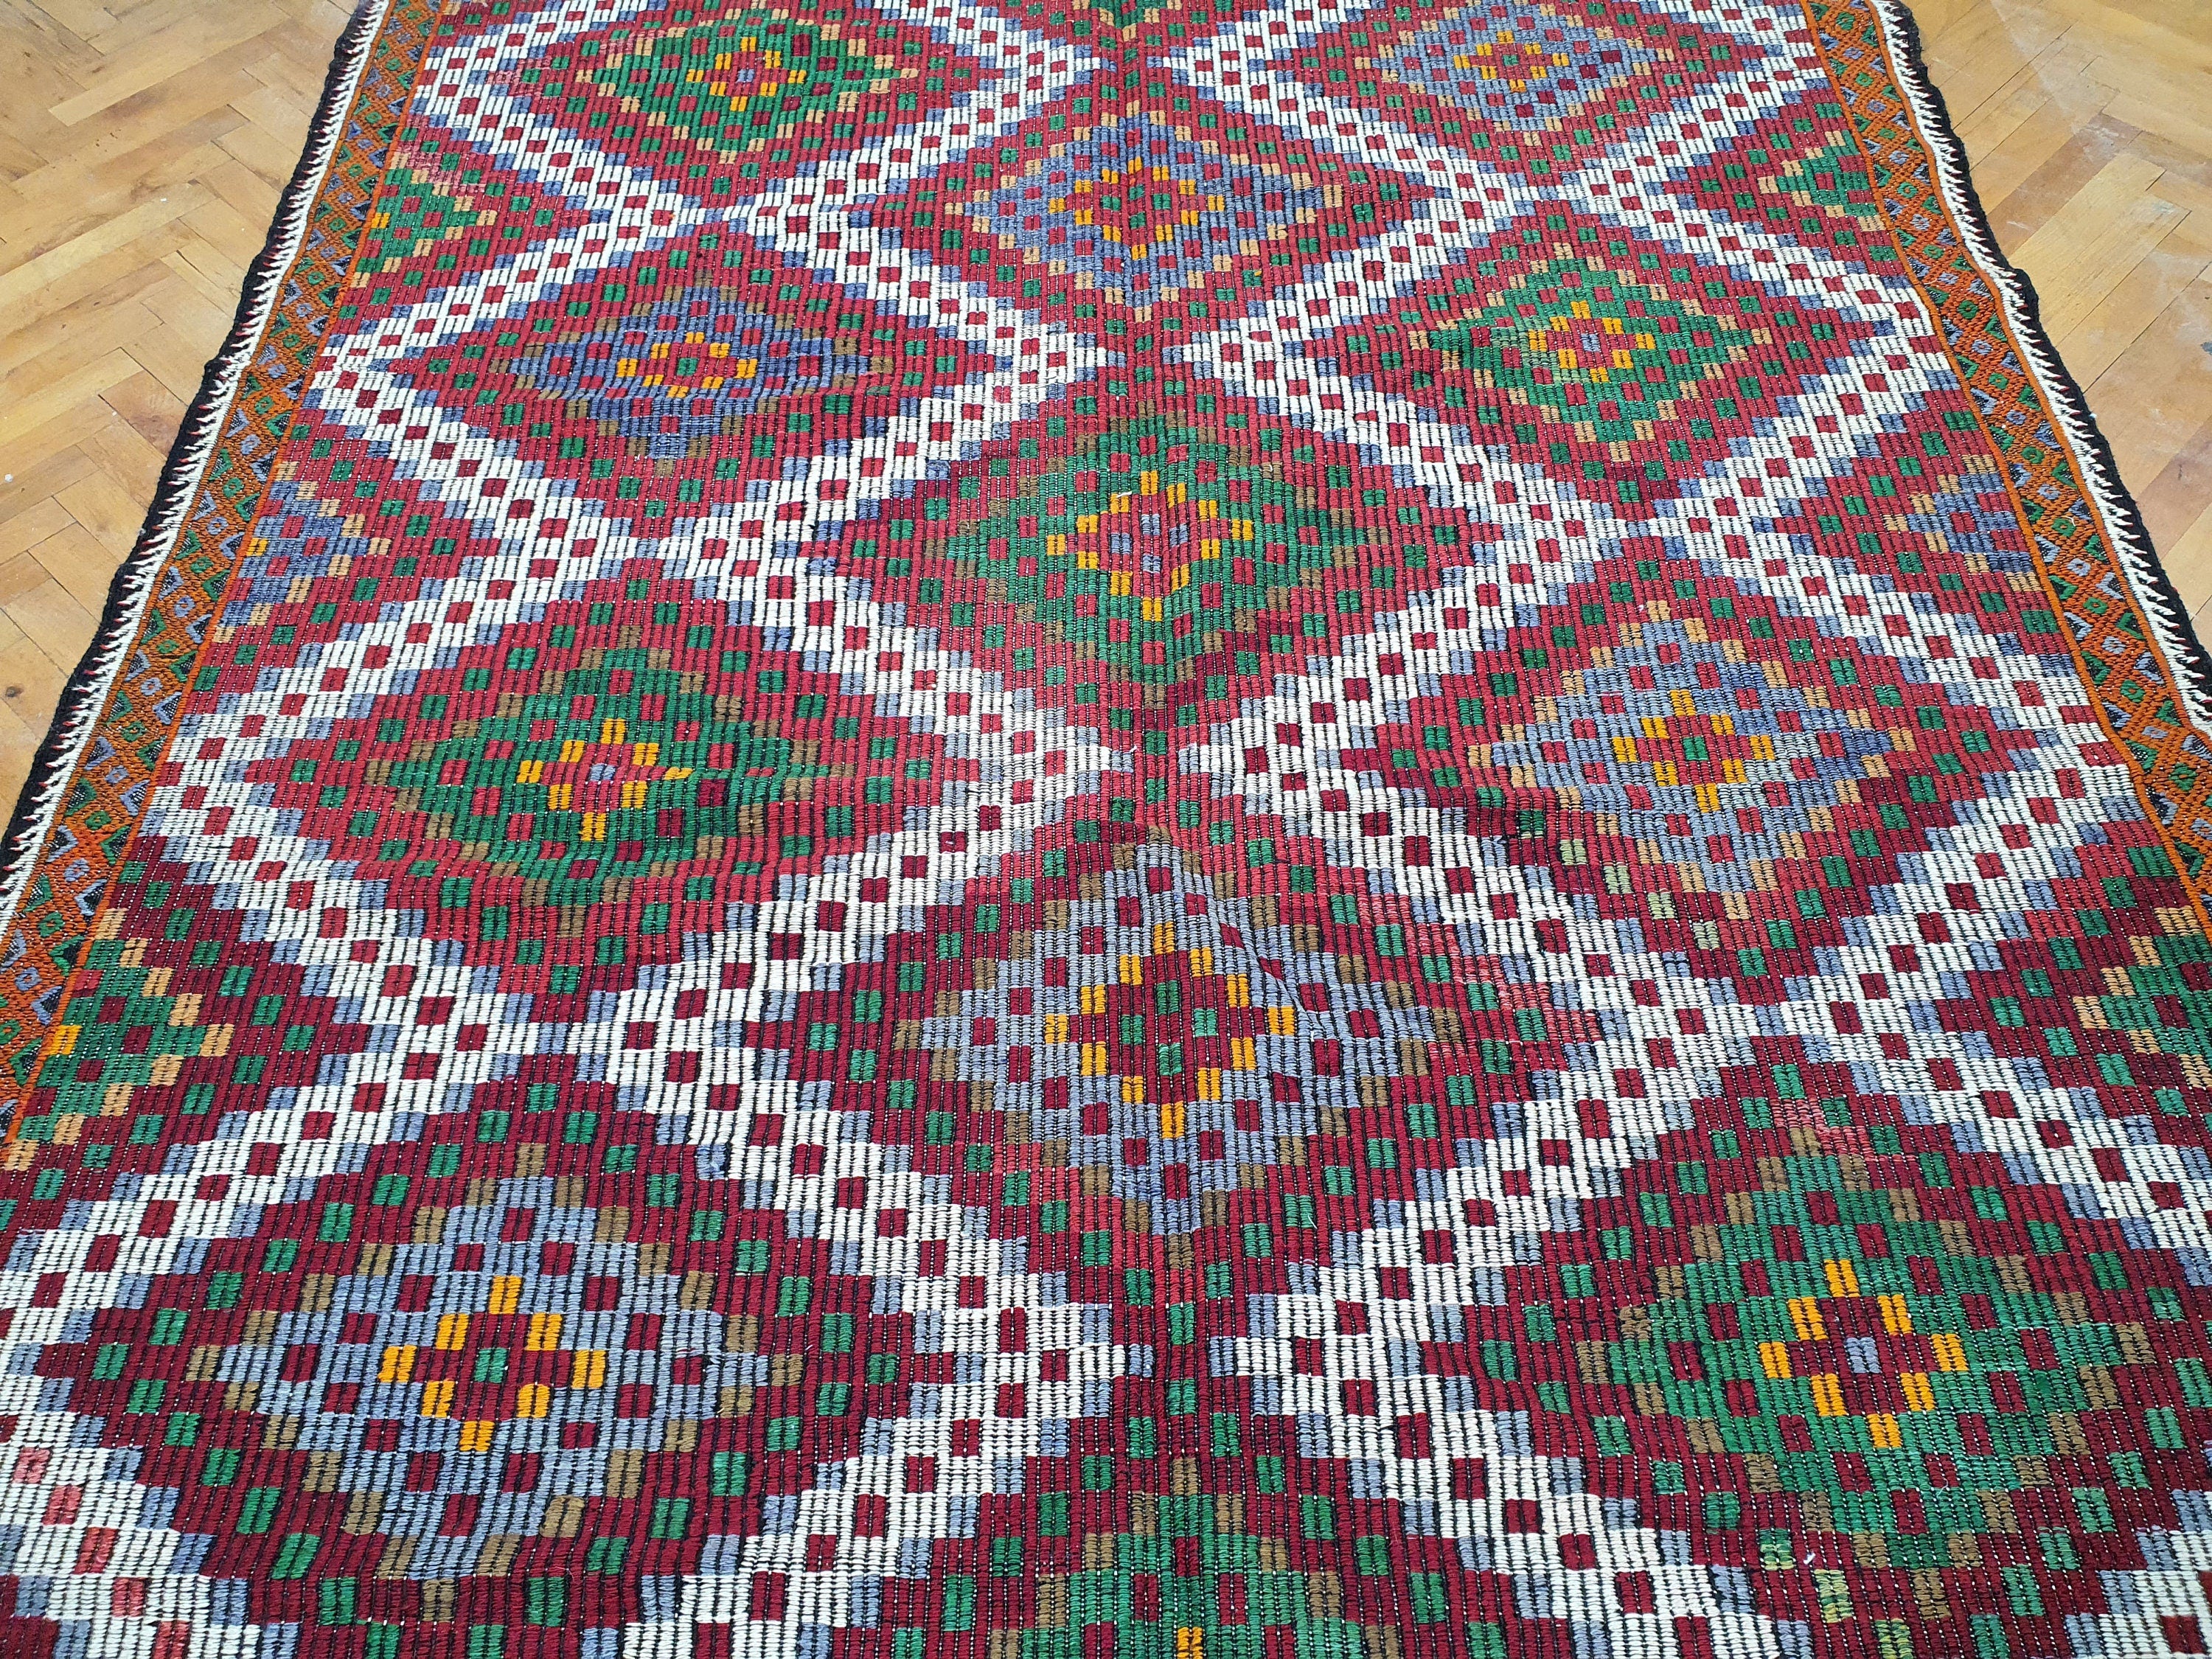 Turkish Kilim Rug 10 x 6 ft Green Orange & White on Brown Natural Wool Embroidered Vintage Cicim Floor Rug for Bohemian or Retro Home Decor